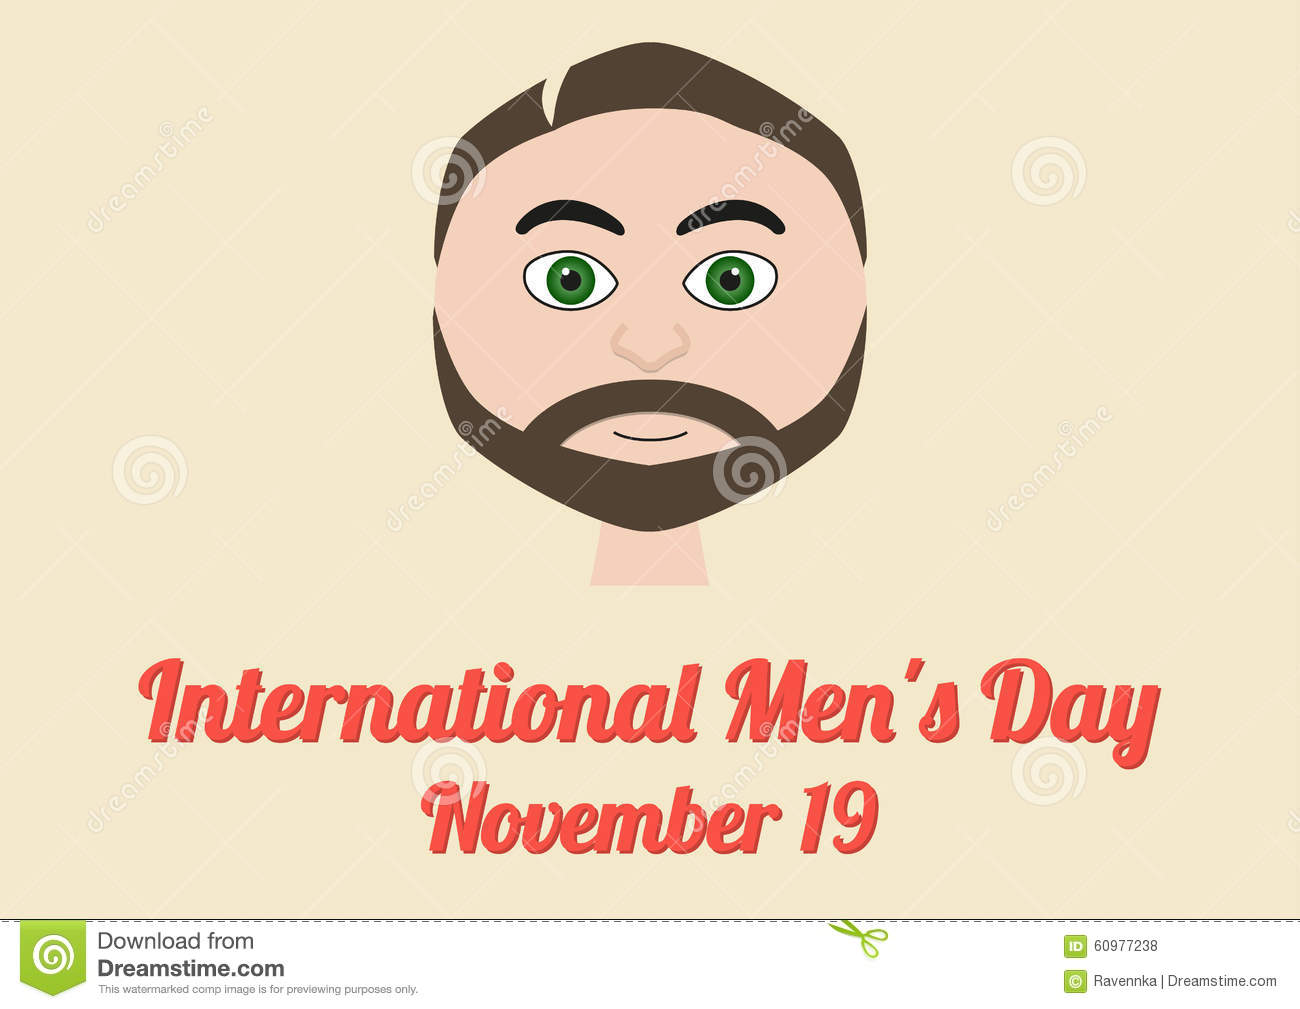 International Men’s Day cartoon greeting card